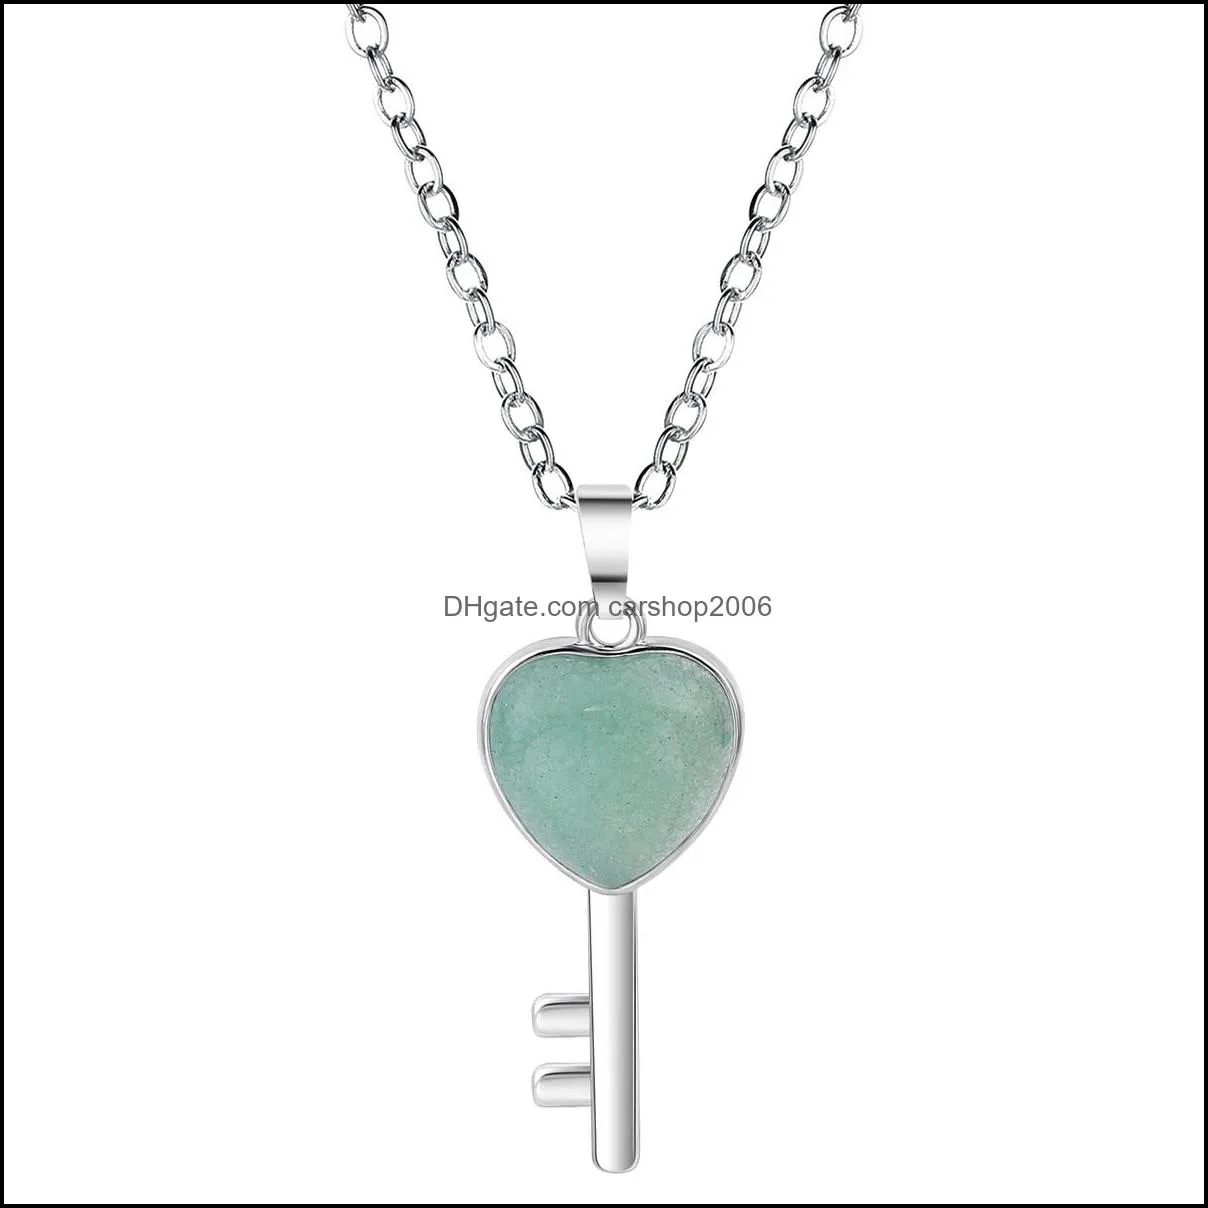 lucky love heart key pendant necklace for women men birthstone healing chakra crystal quartz jewelry 45cm silver chain